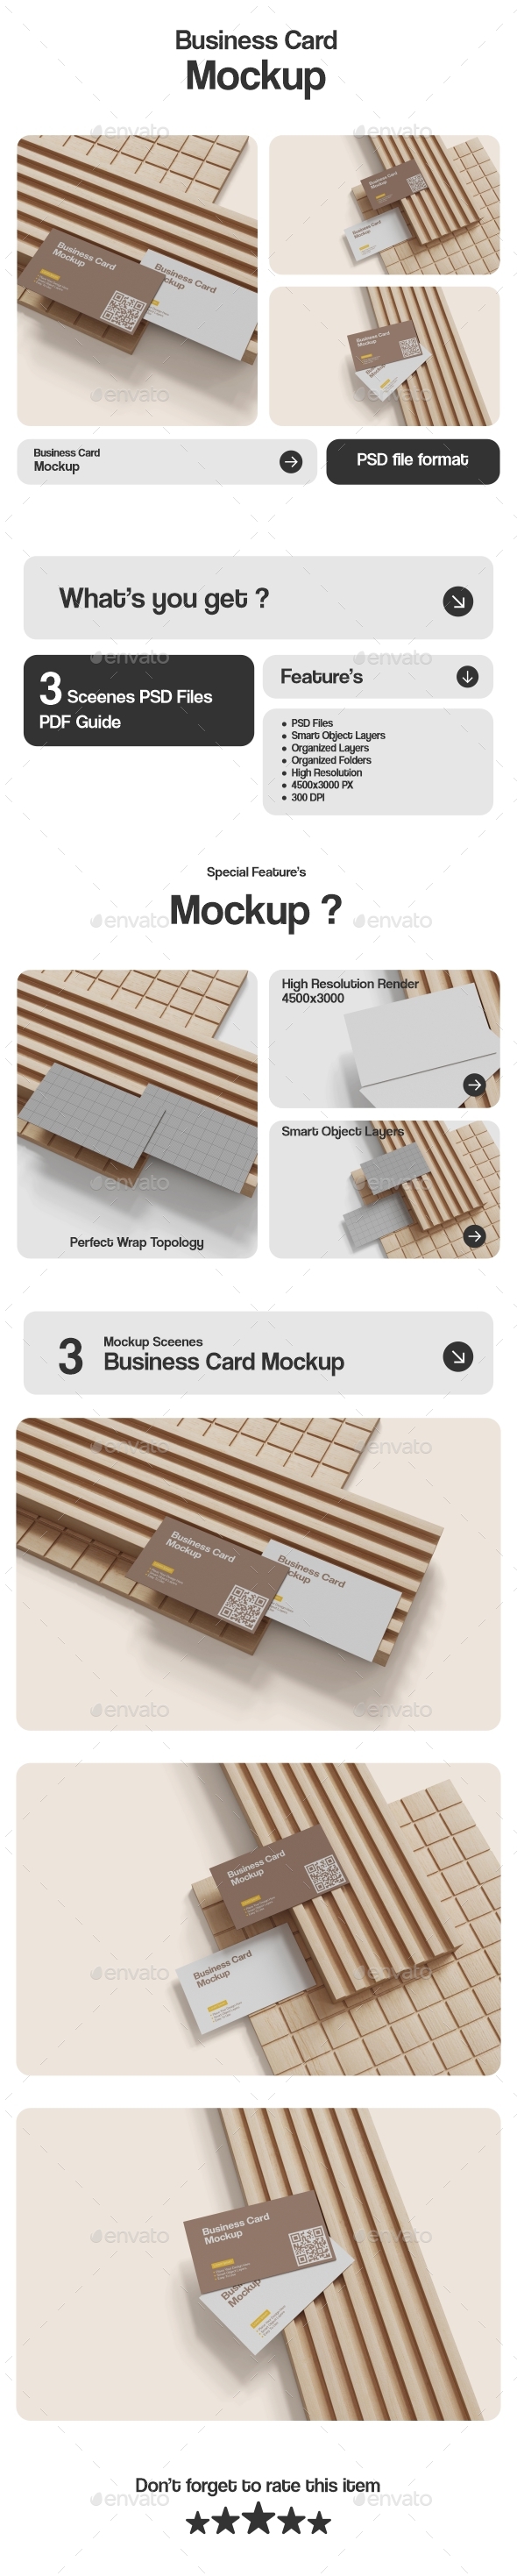 [DOWNLOAD]Business Card Mockup